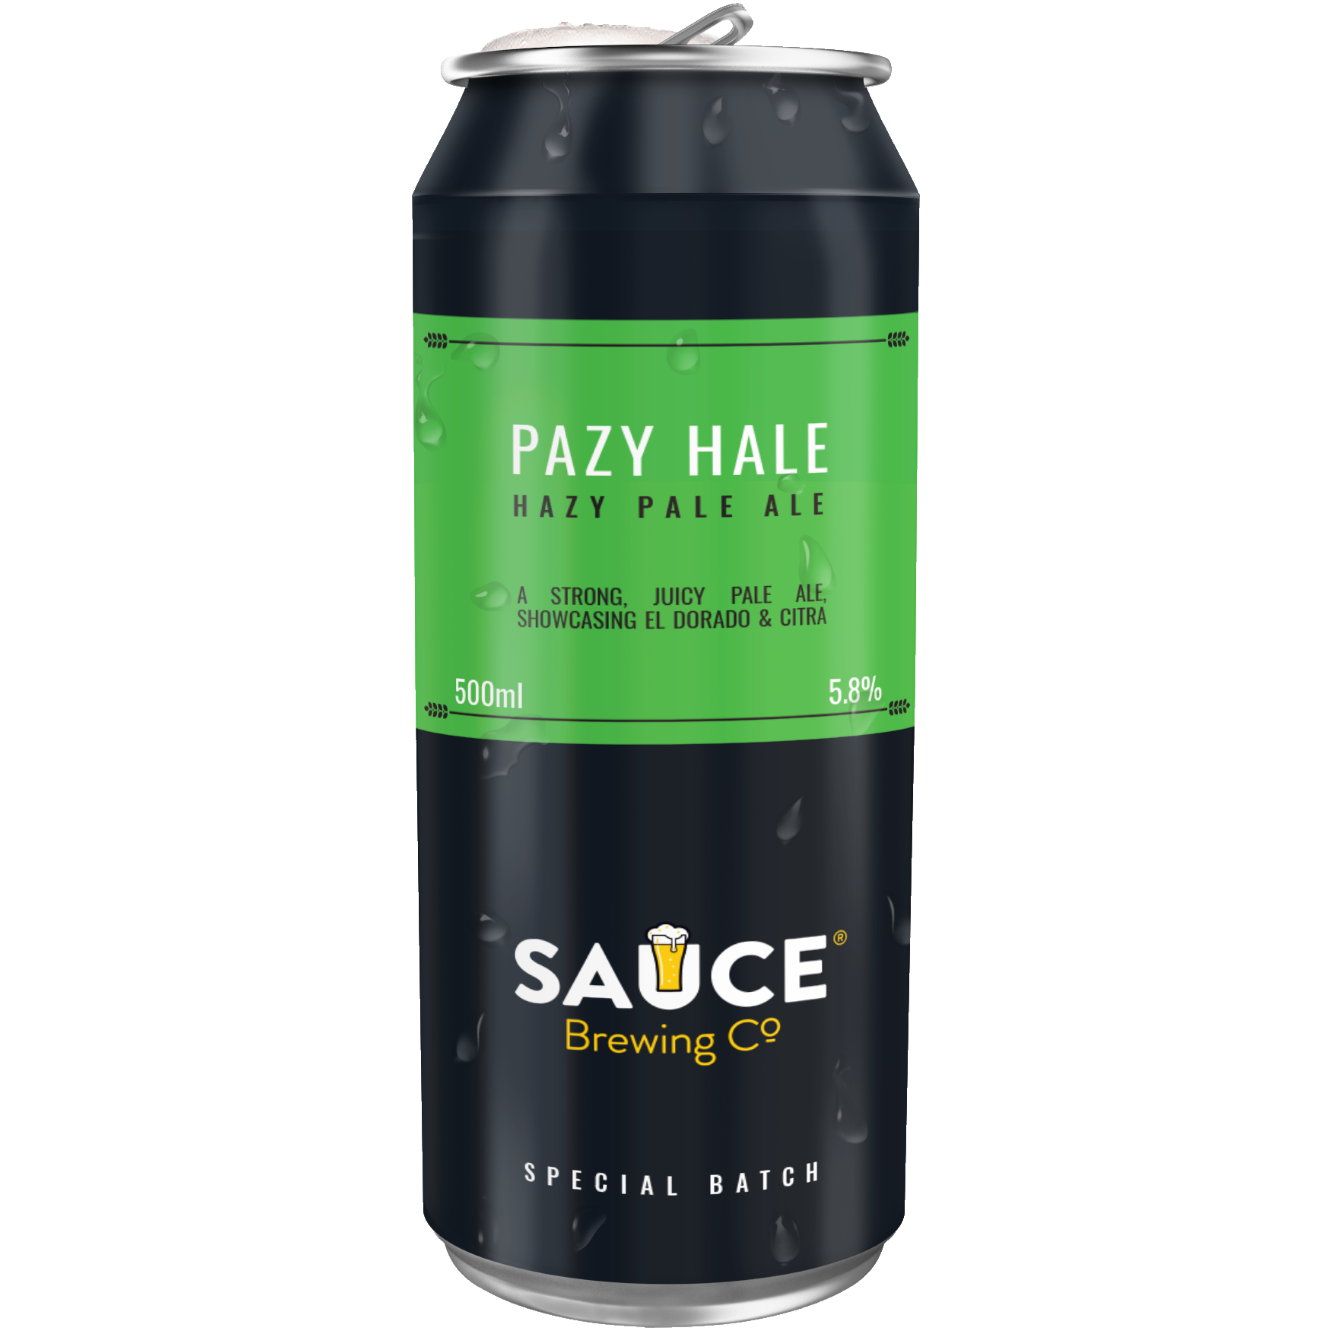 pazy-hale-sauce-brewing-co